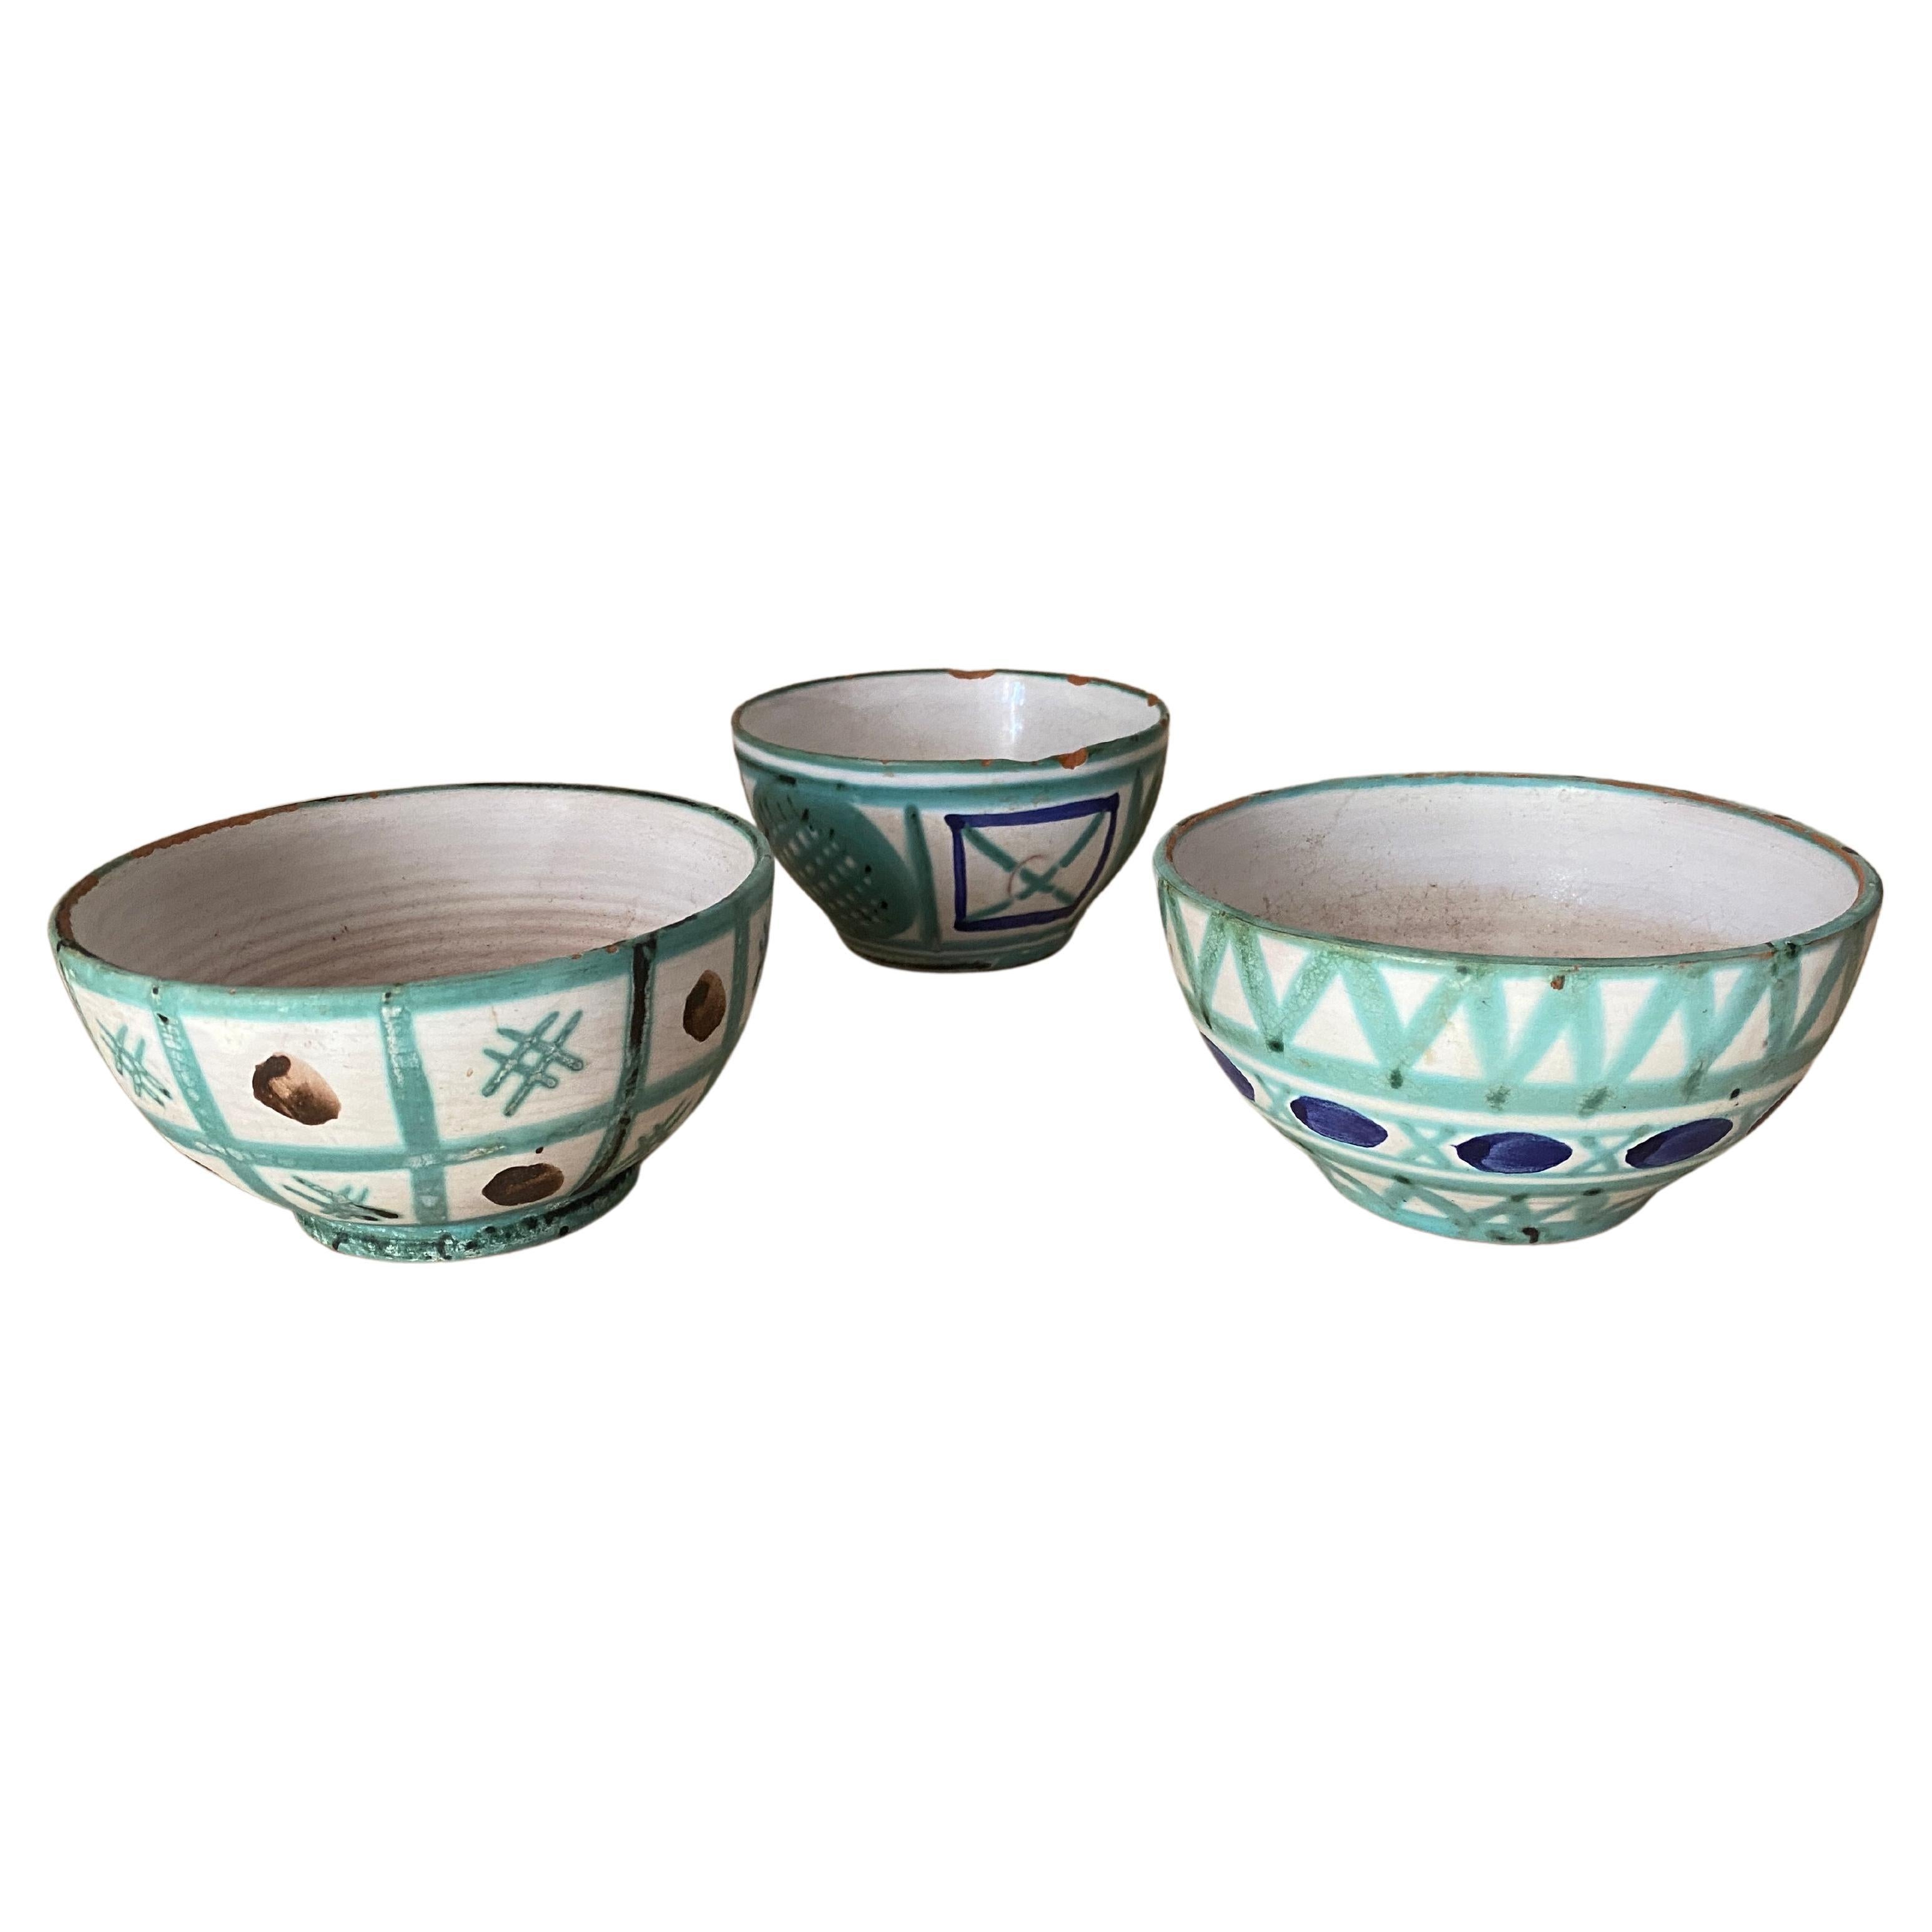 Robert Picault Ceramic bowls Green Blue and Brown Color France 1950 Set of 3